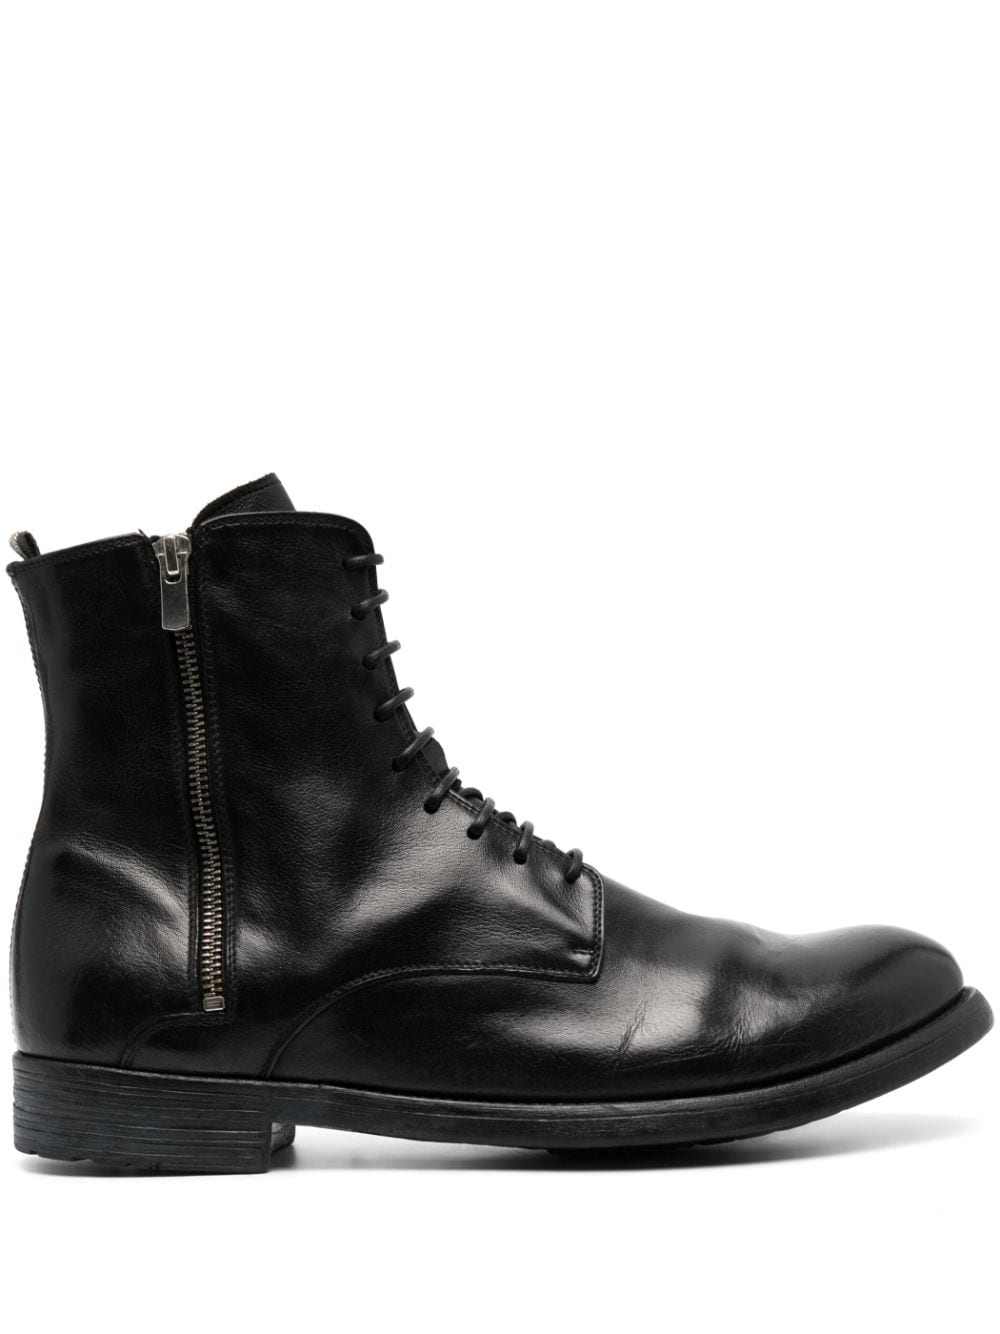 Officine Creative Hive 053 leather ankle boots - Black von Officine Creative